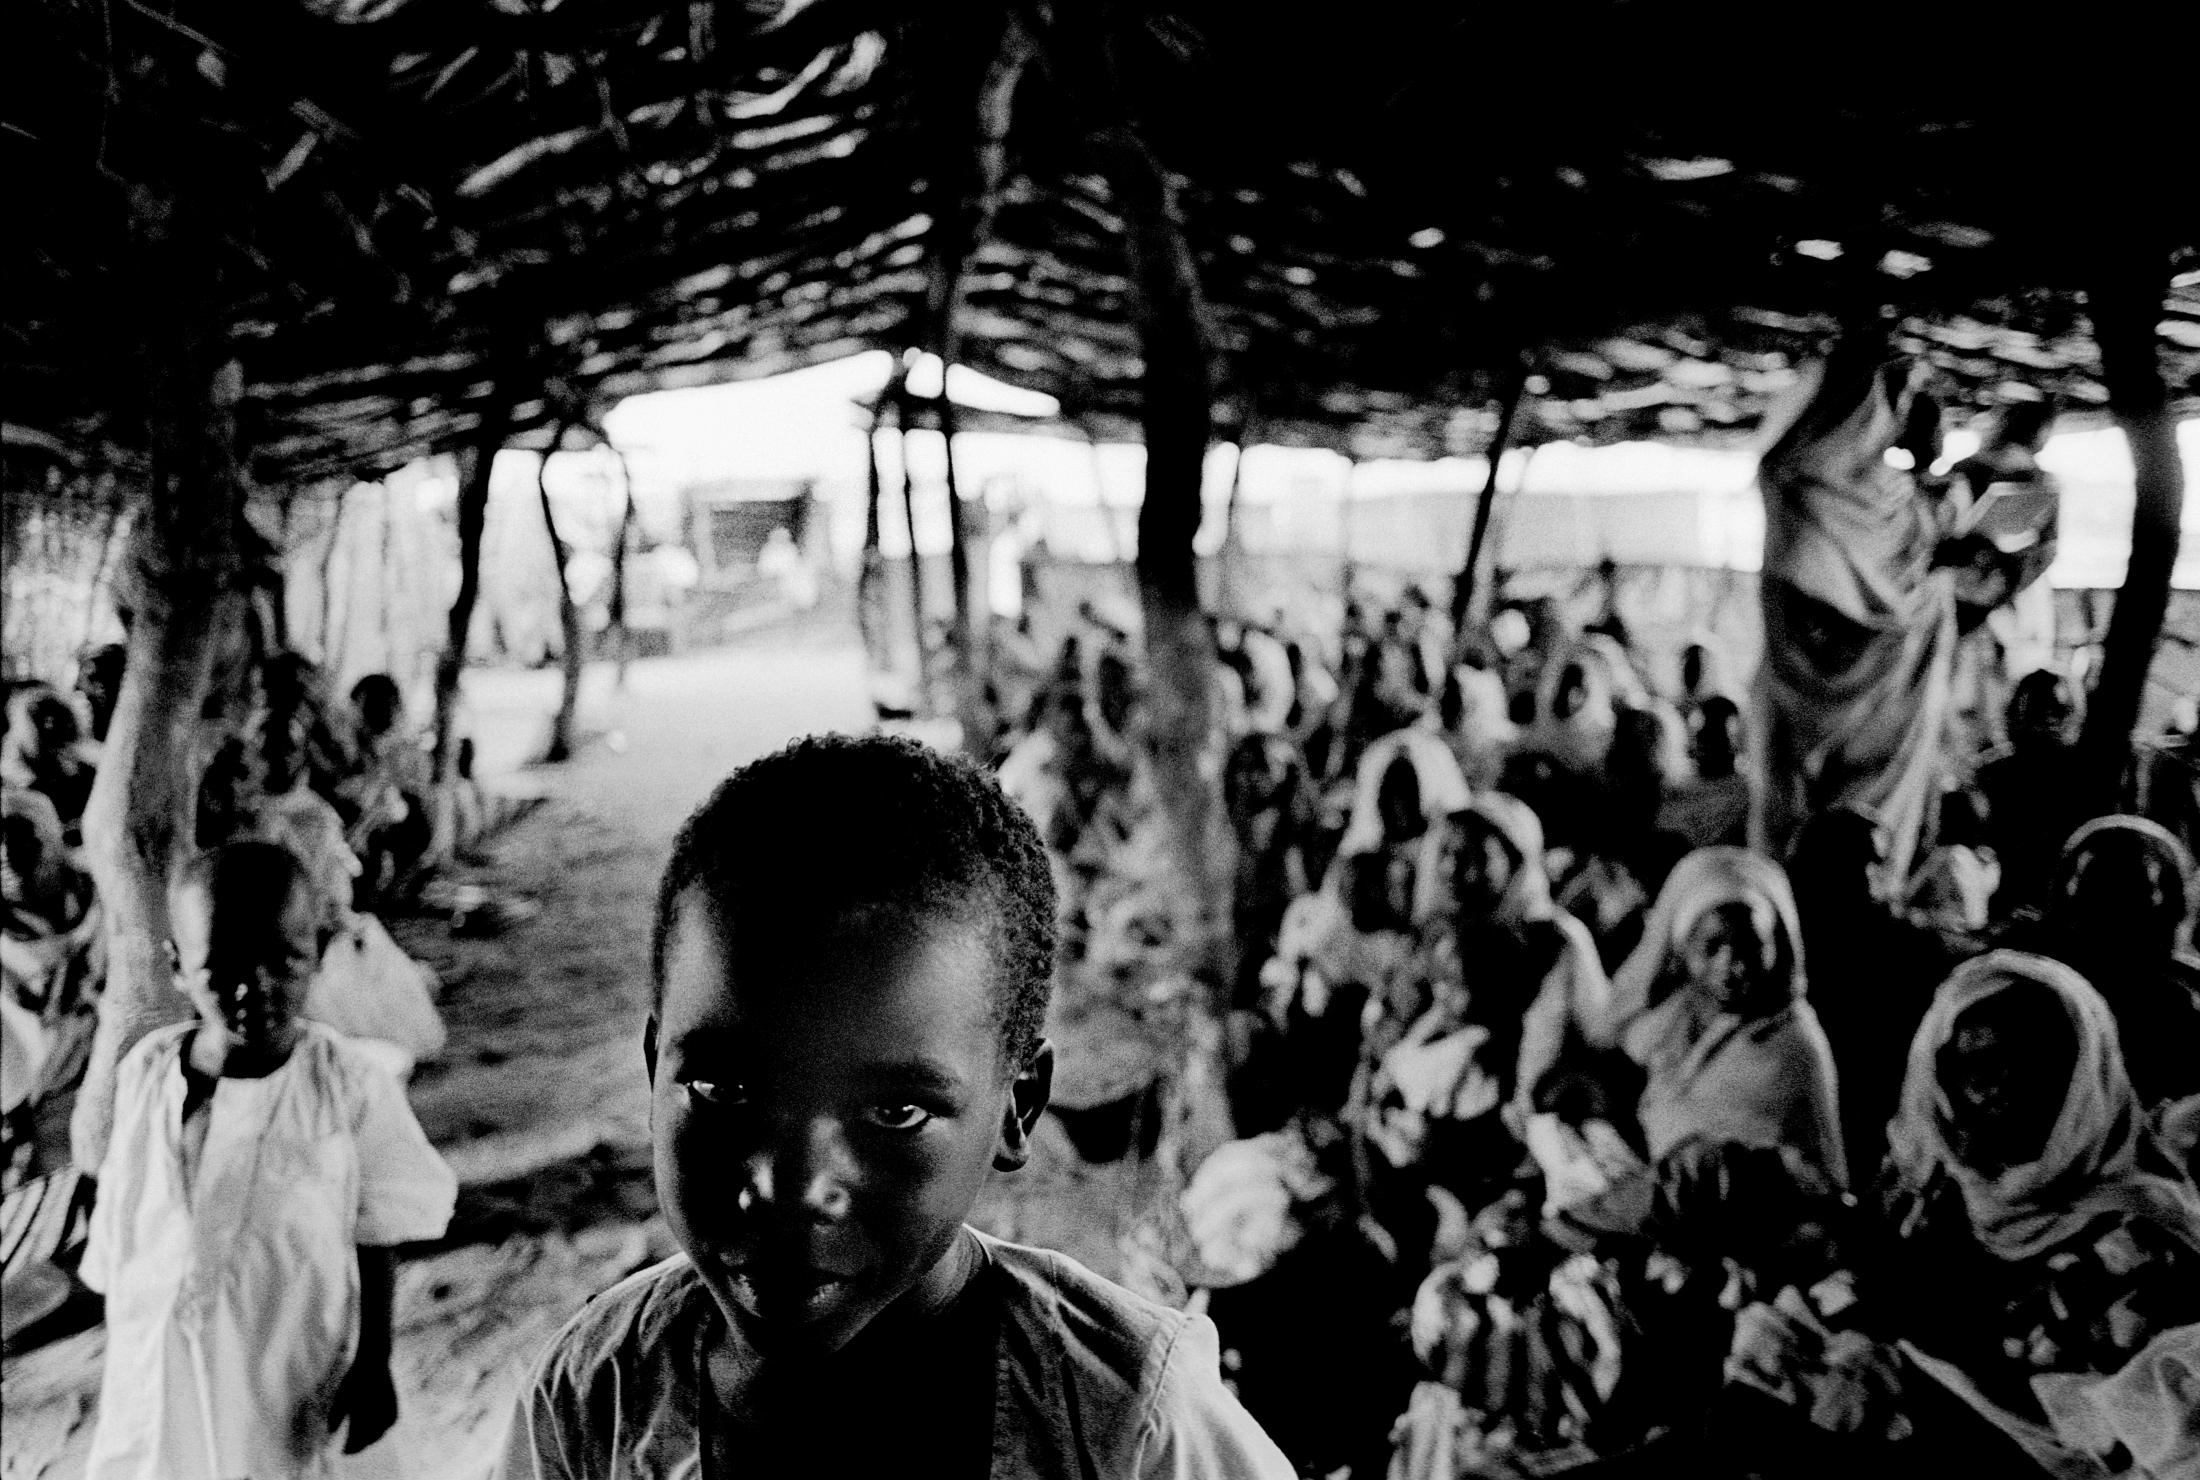 Darfur - SUDAN Nyala, South Darfur Women and malnourished children...